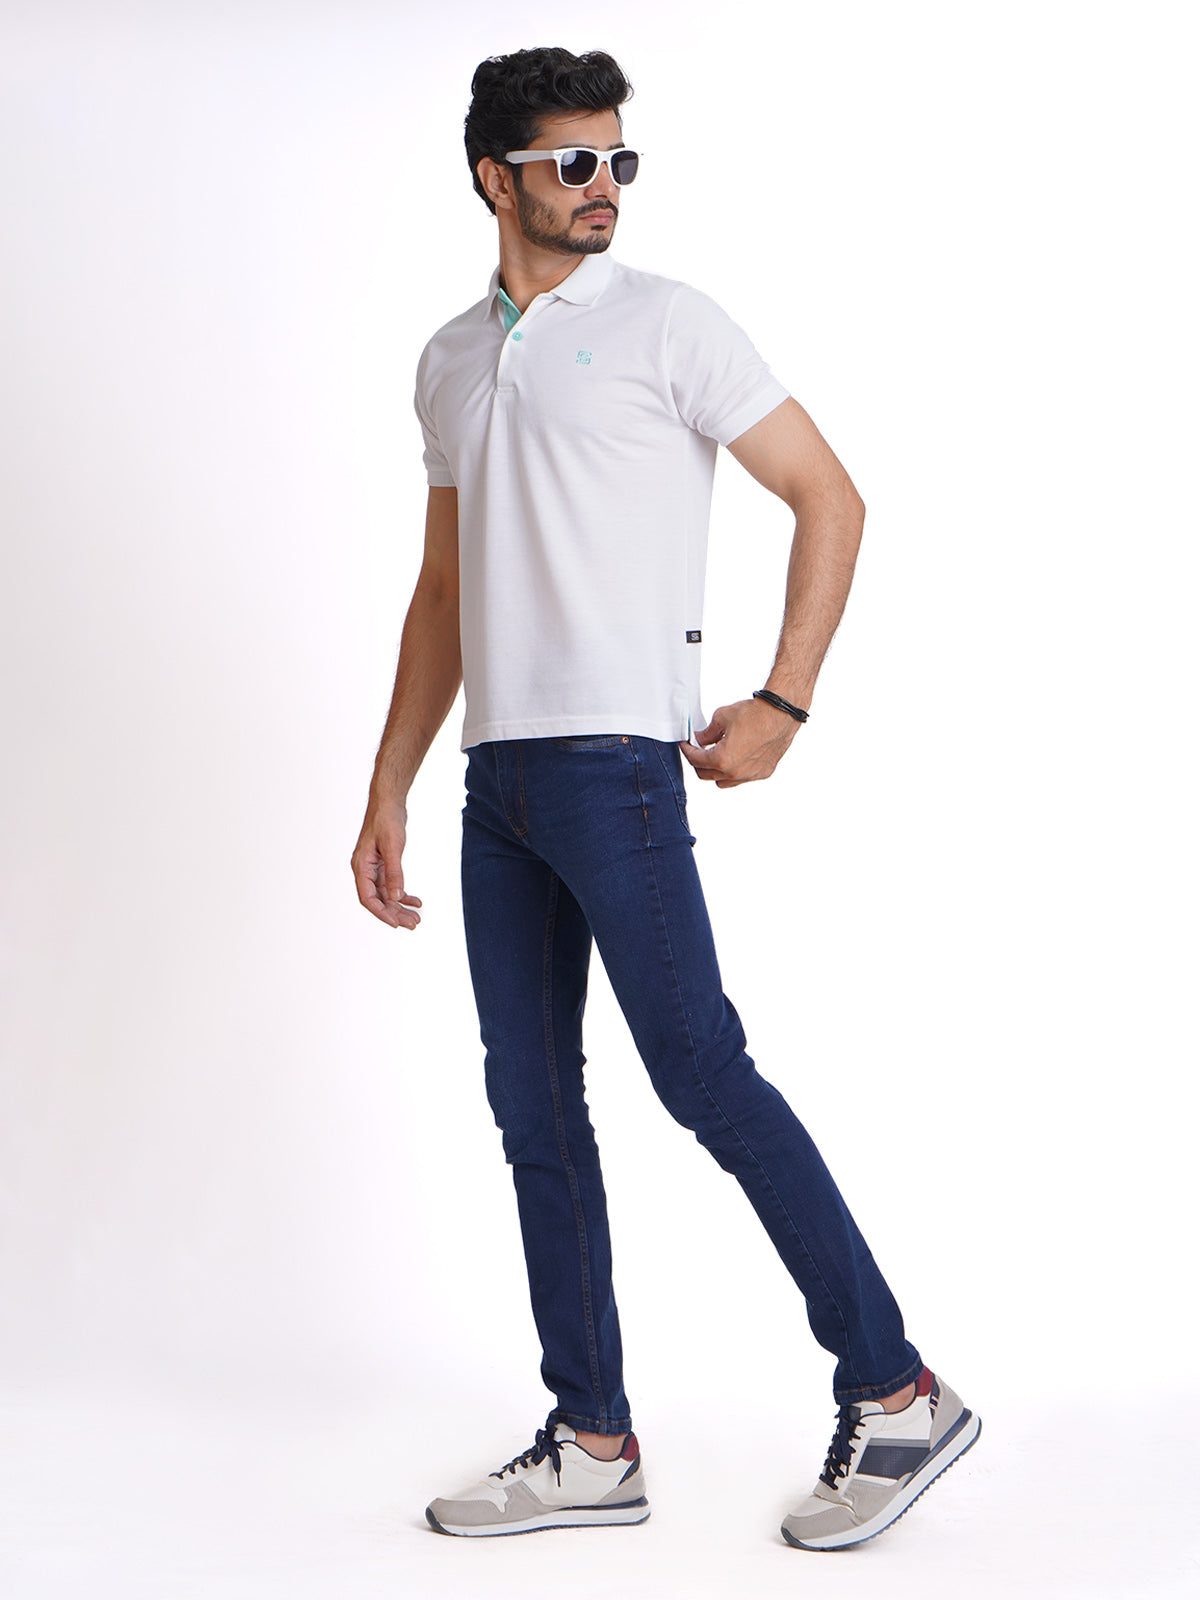 White Half Sleeves Designer Polo T-Shirt (POLO-613)